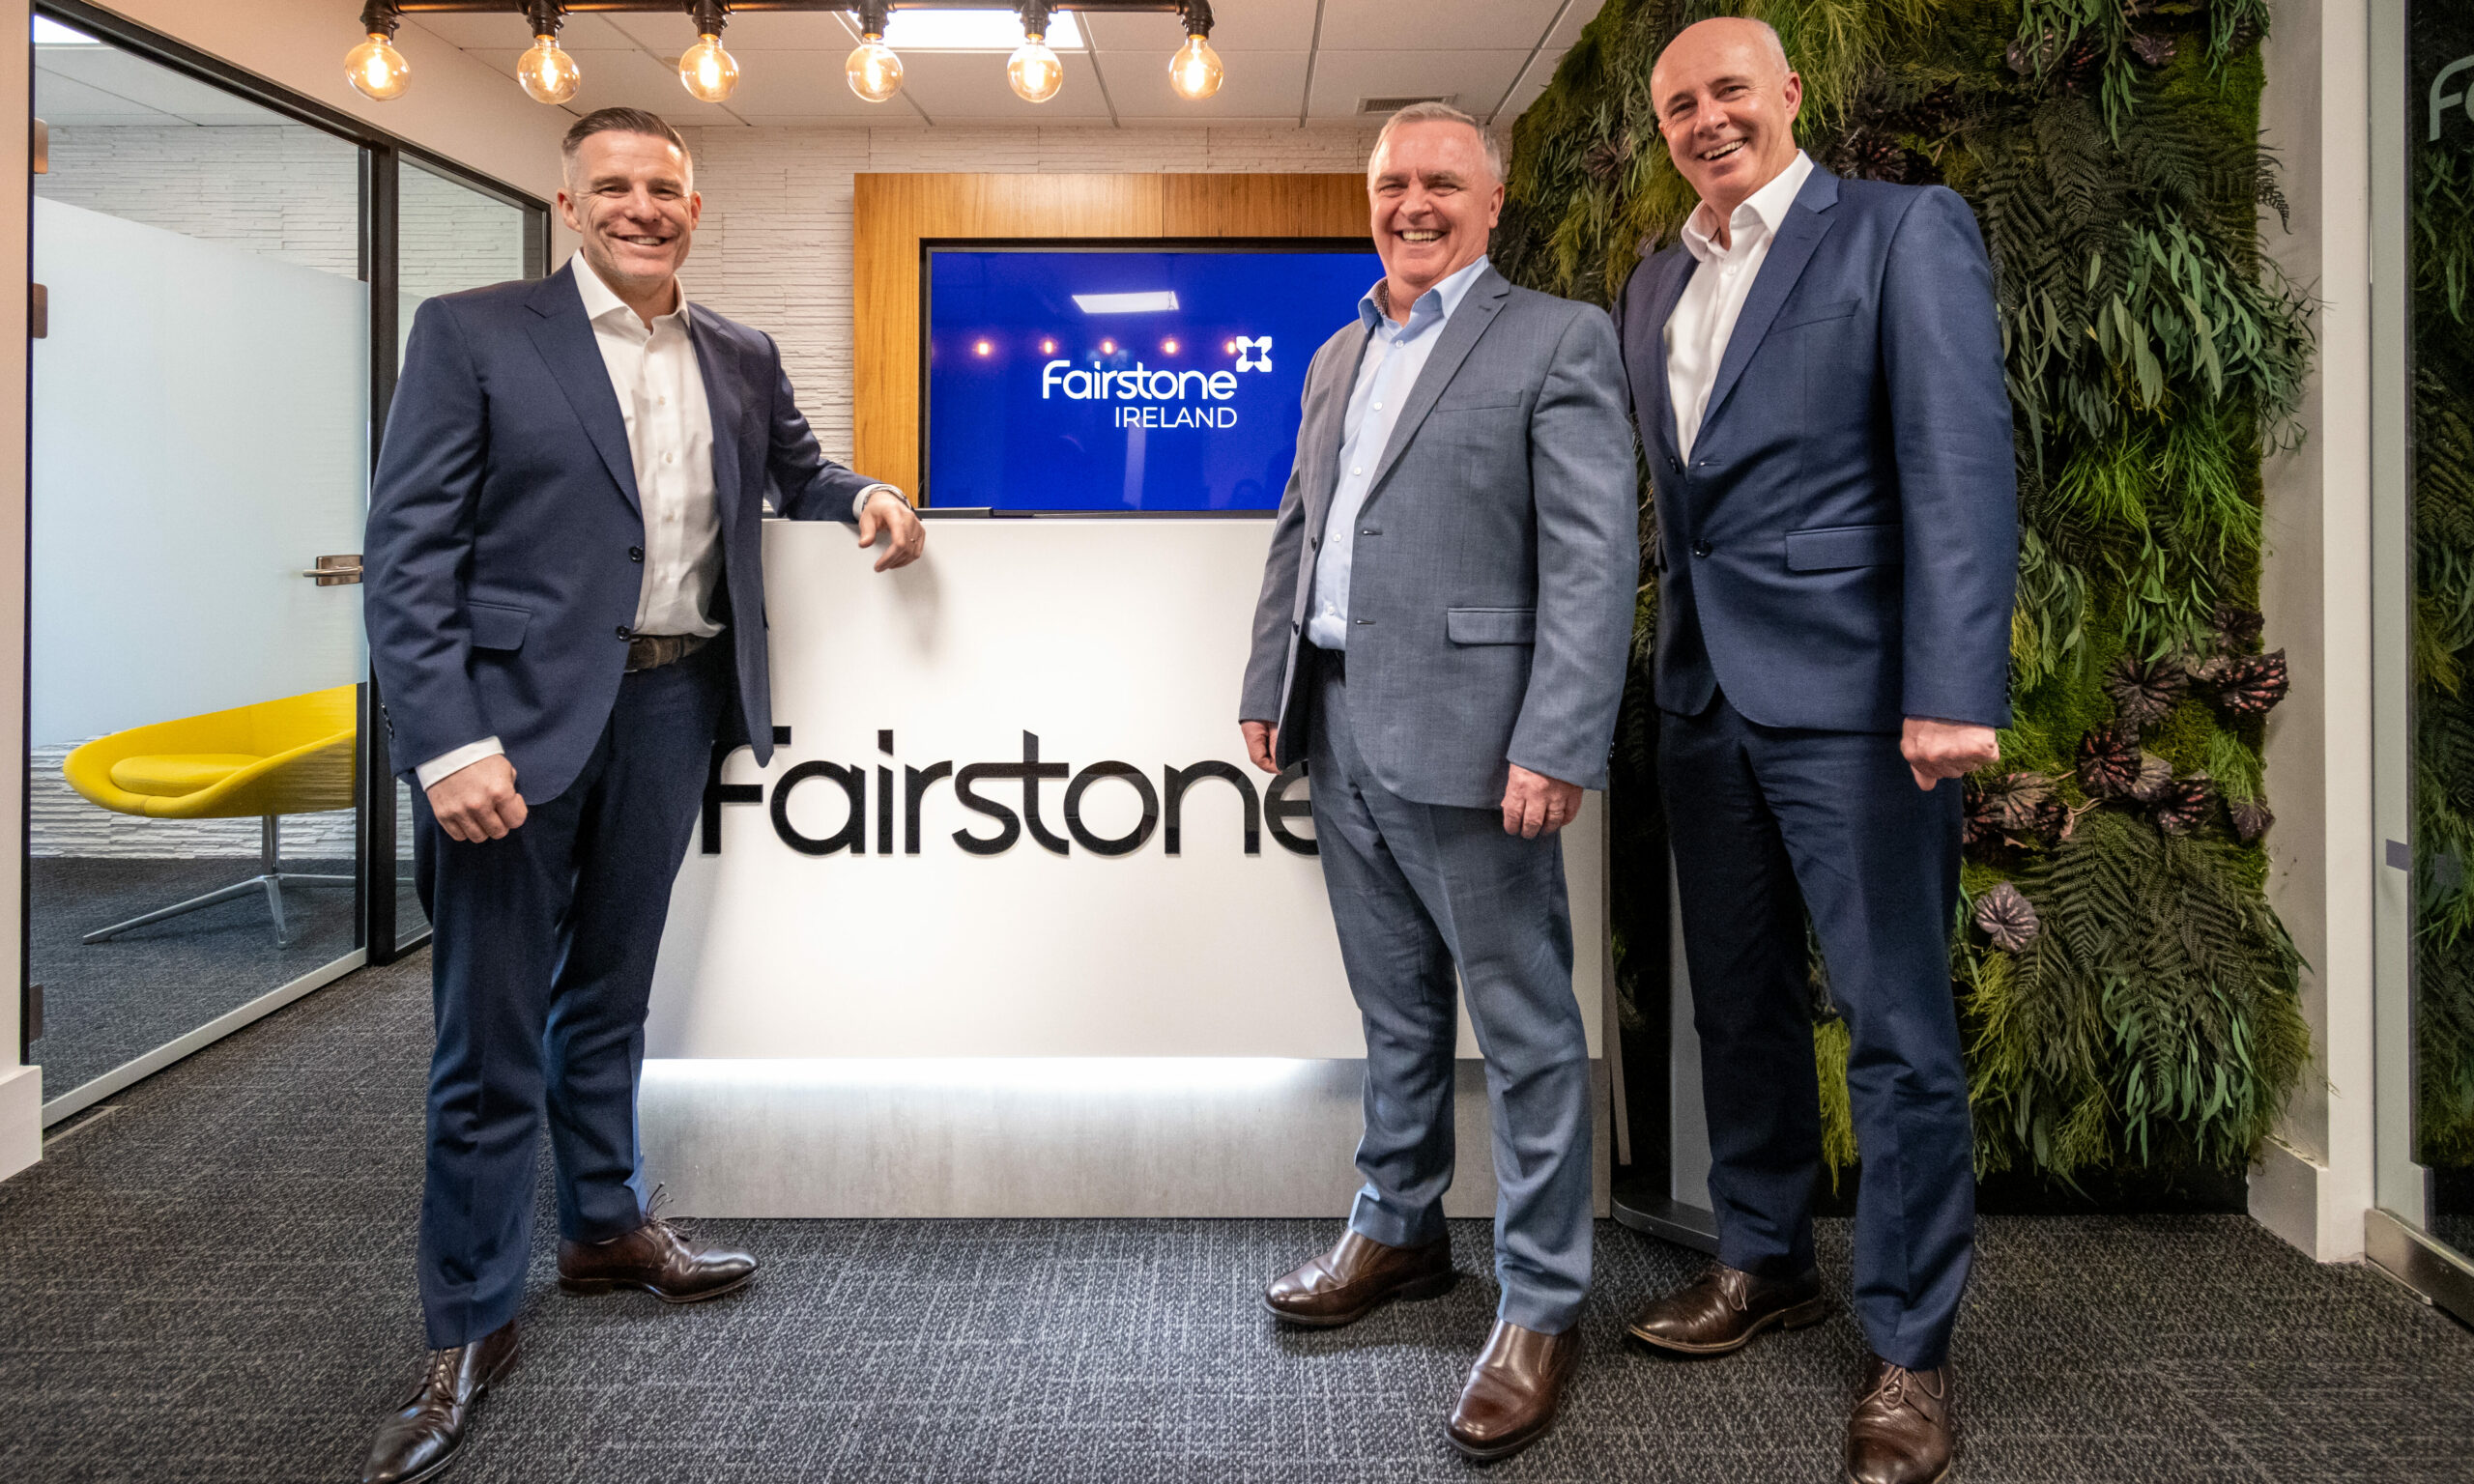 Fairstone Ireland and Premier Financial Unite in Strategic Partnership